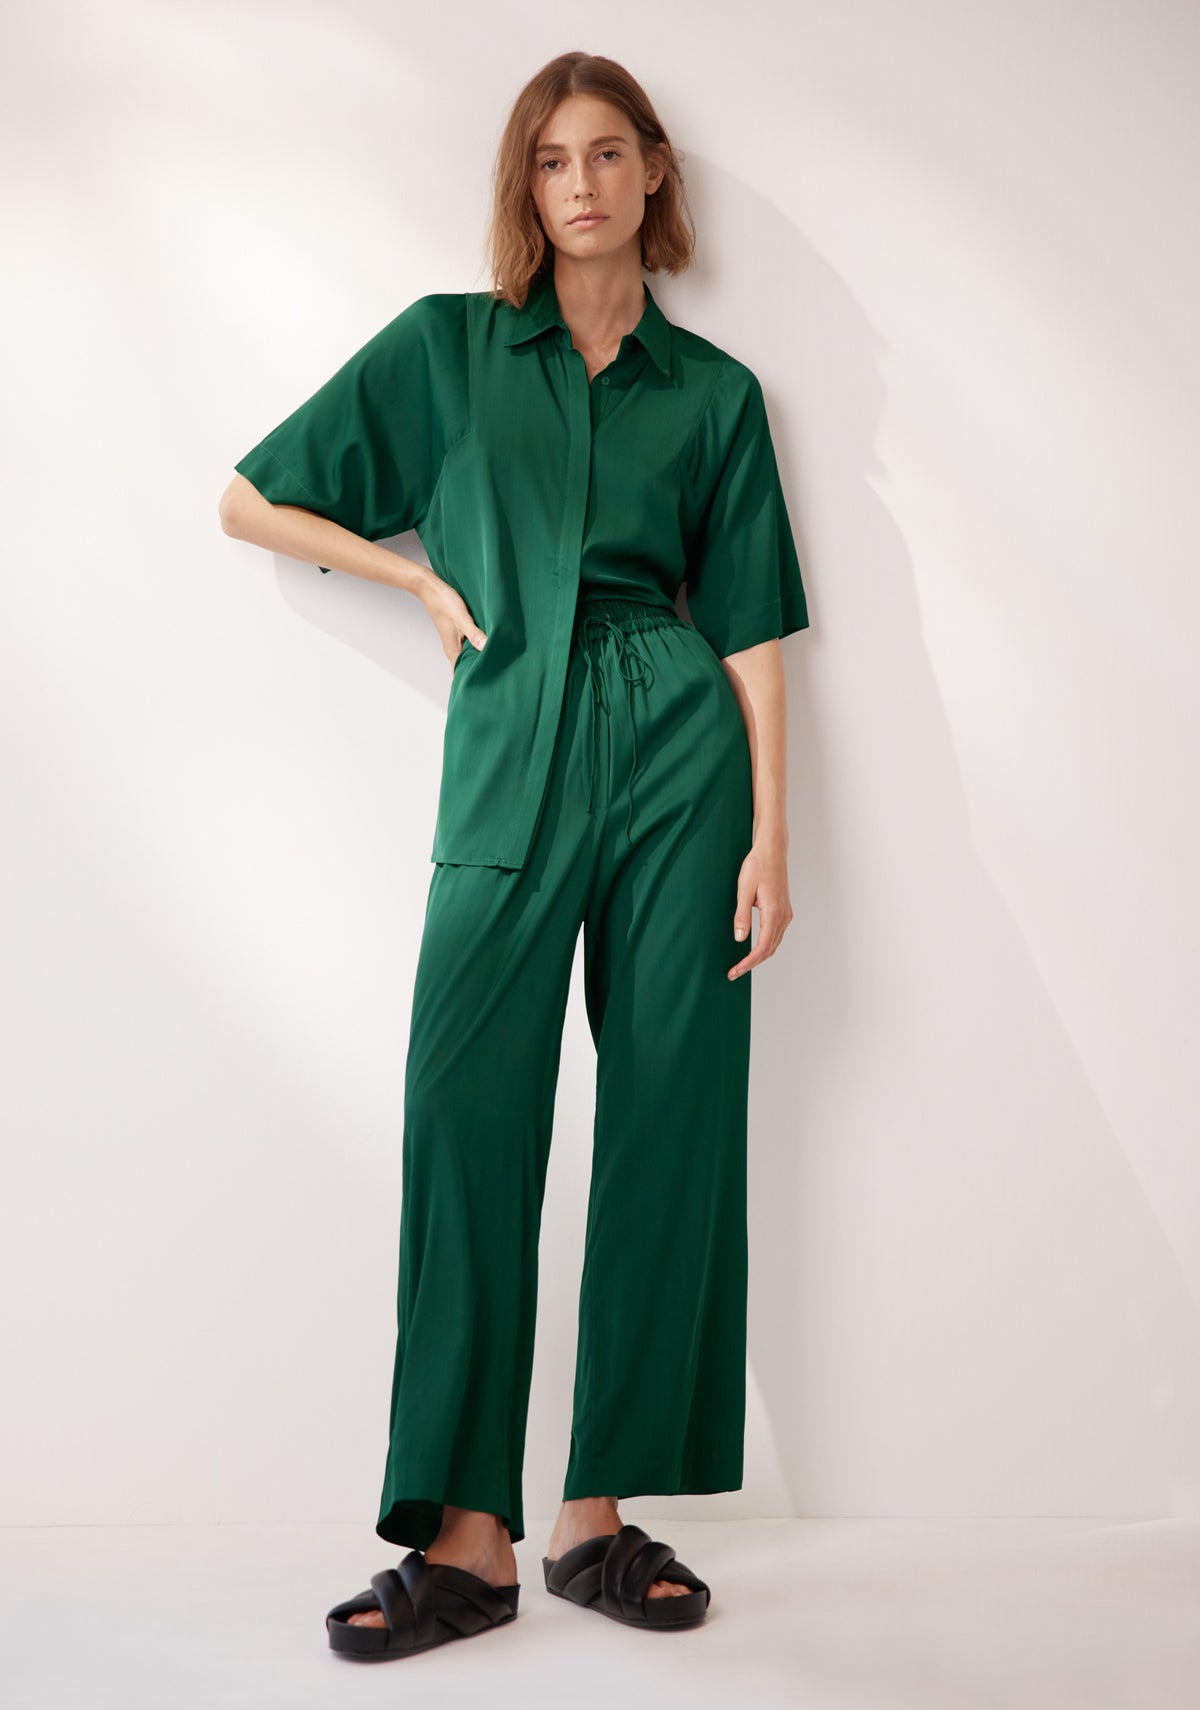 MORRISON WAVERLEY SHIRT - GREEN - ESCAPE CLOTHING